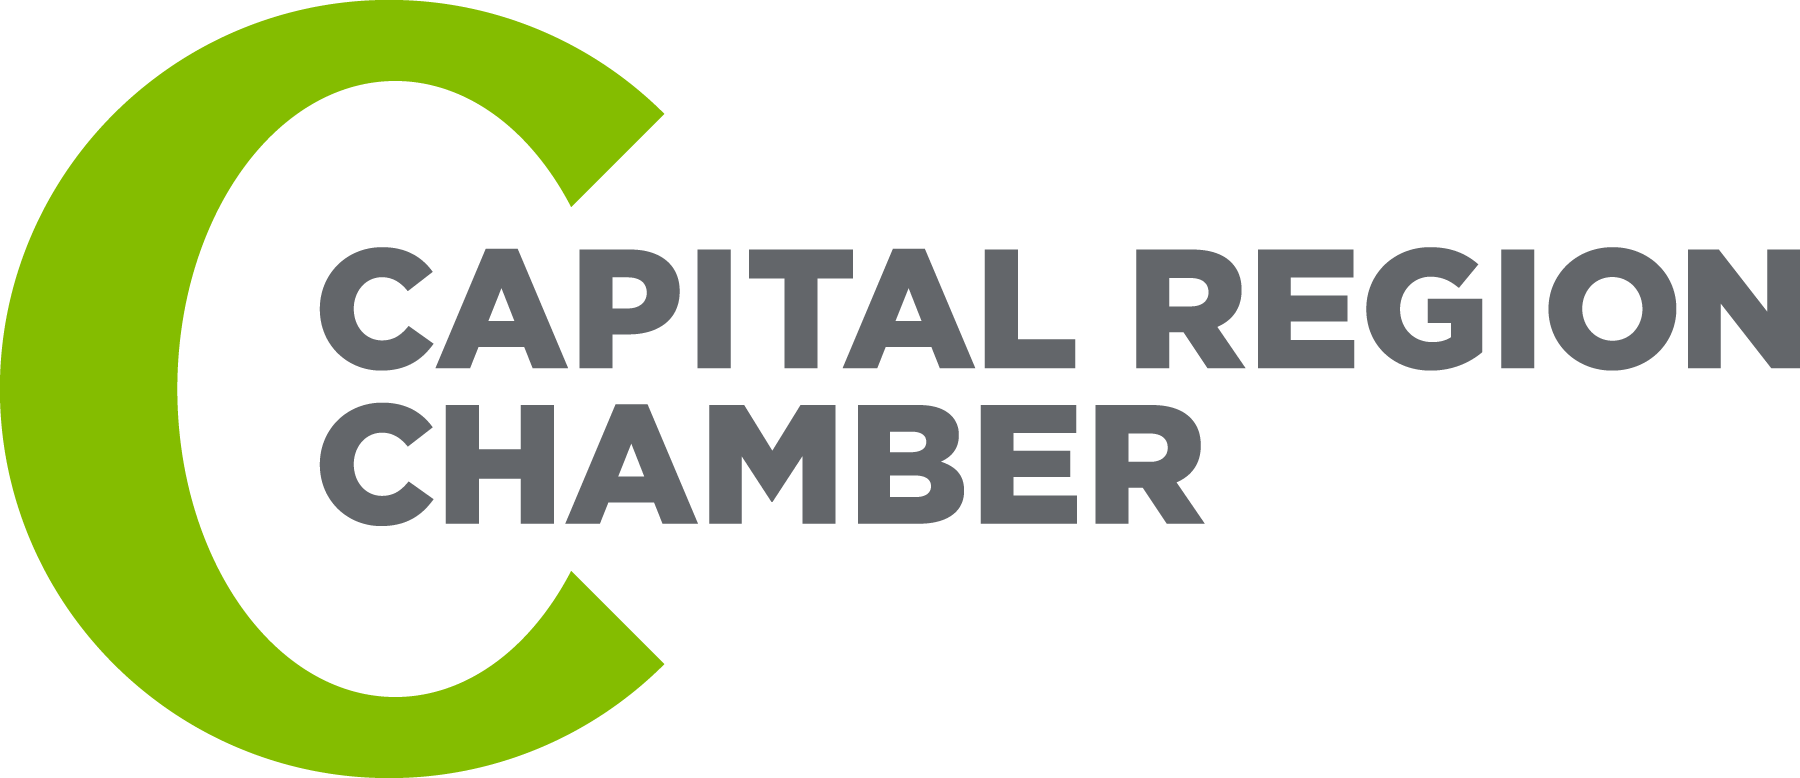 Chamber_logo_stacked_RGB